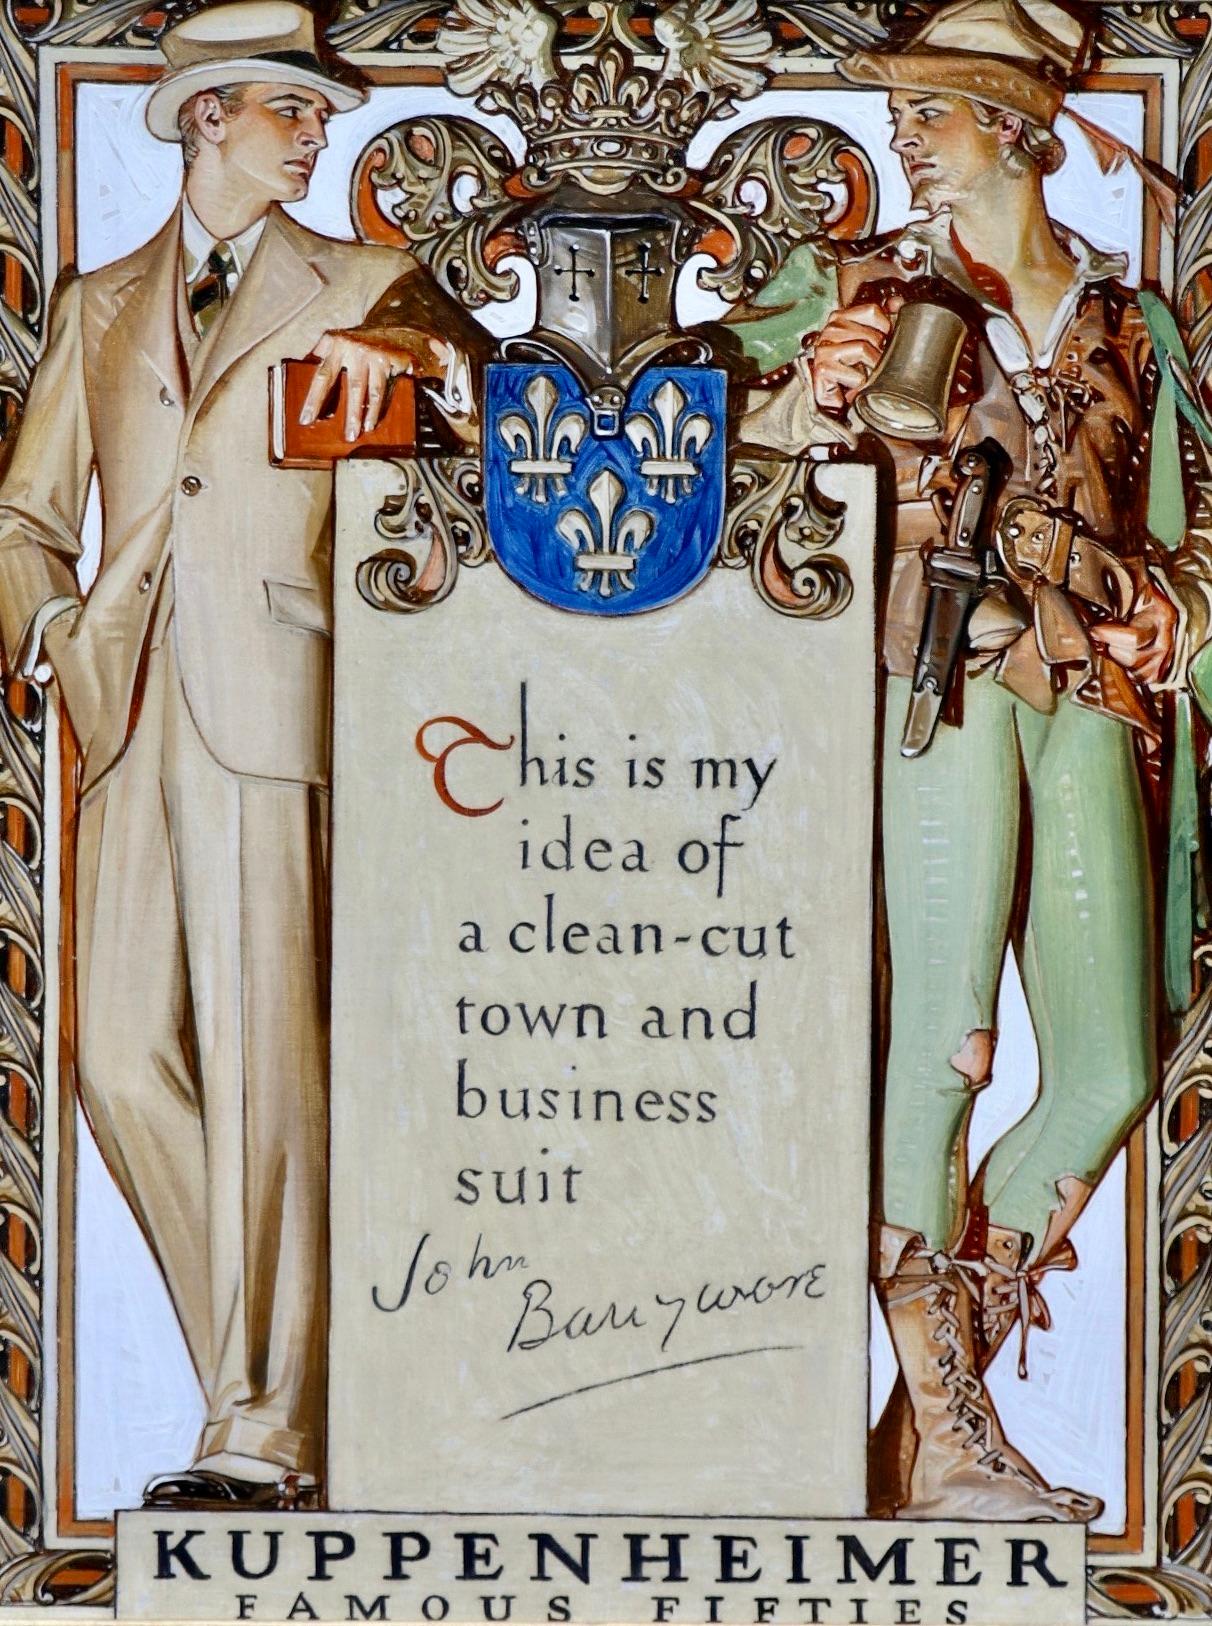 Kuppenheimer Famous Fifties Featuring John Barrymore - Brown Figurative Painting by Joseph Christian Leyendecker